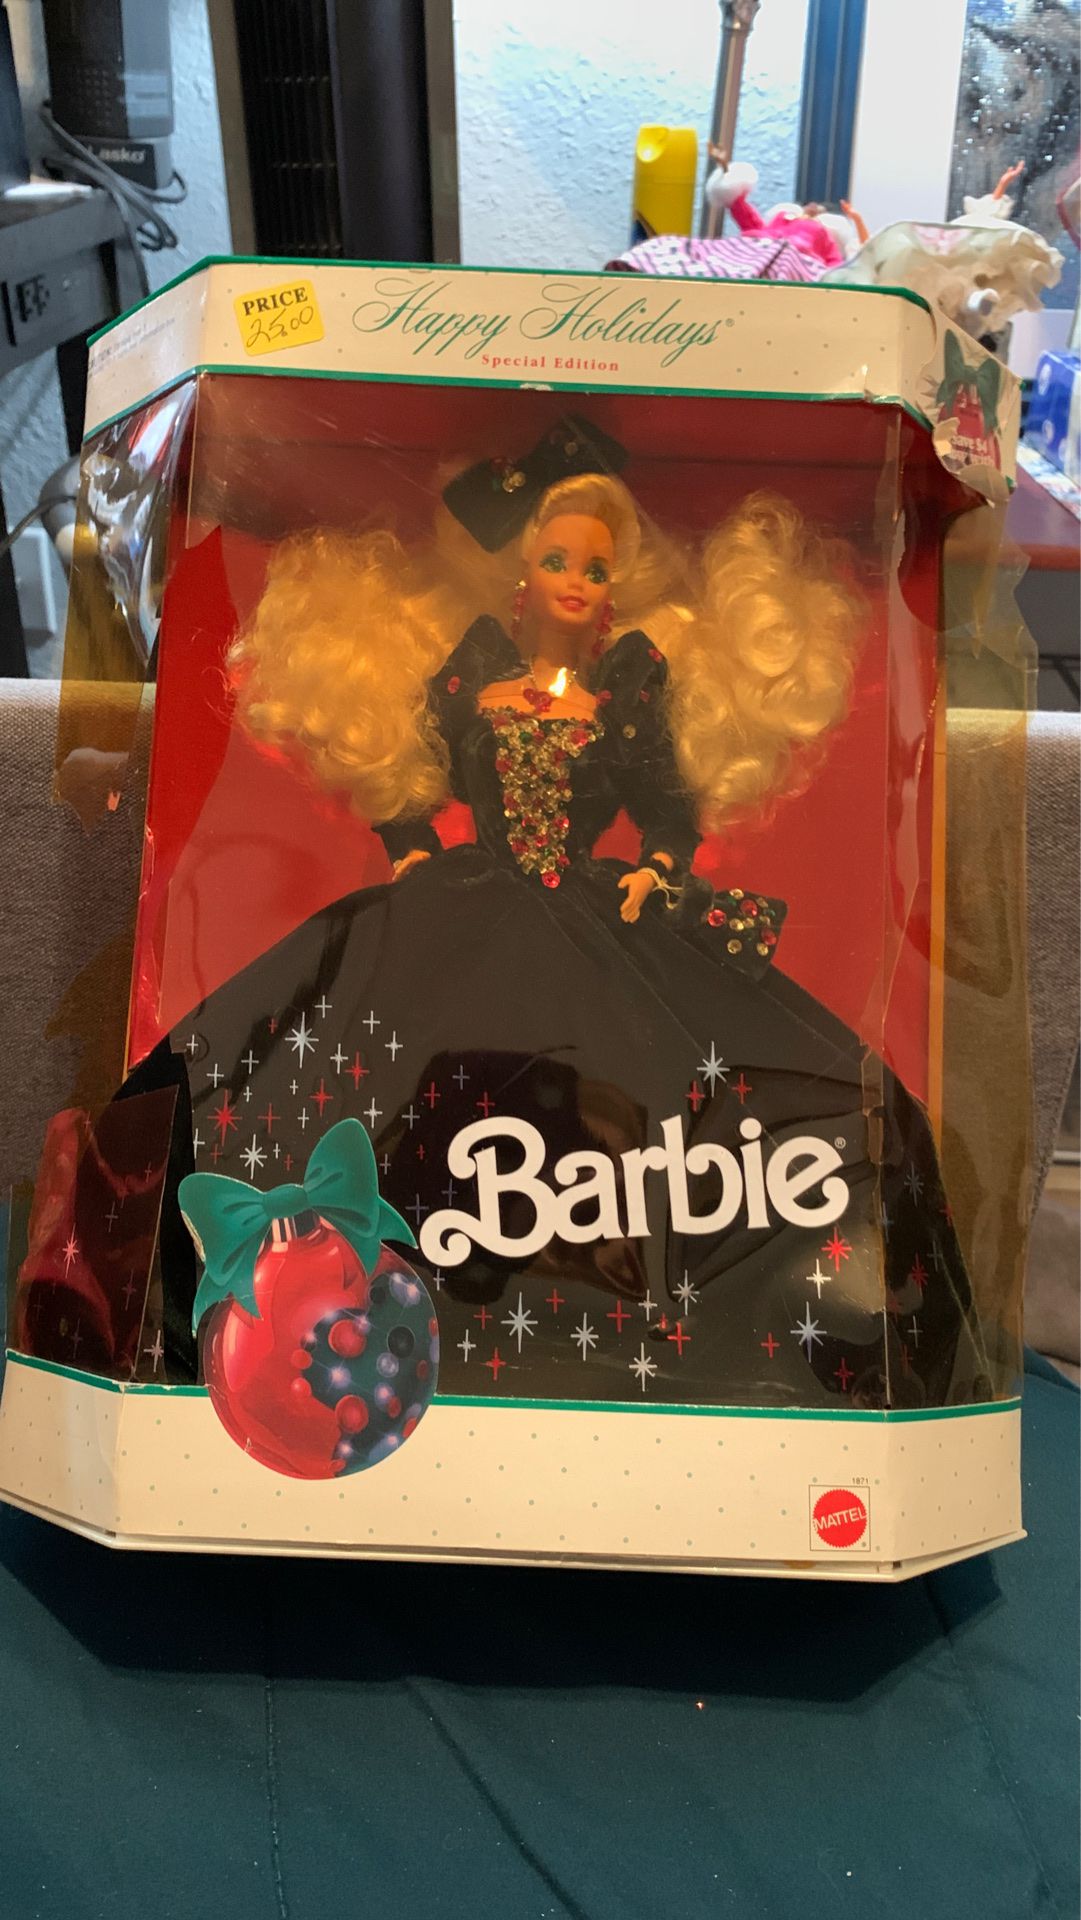 Happy Holidays special edition Barbie